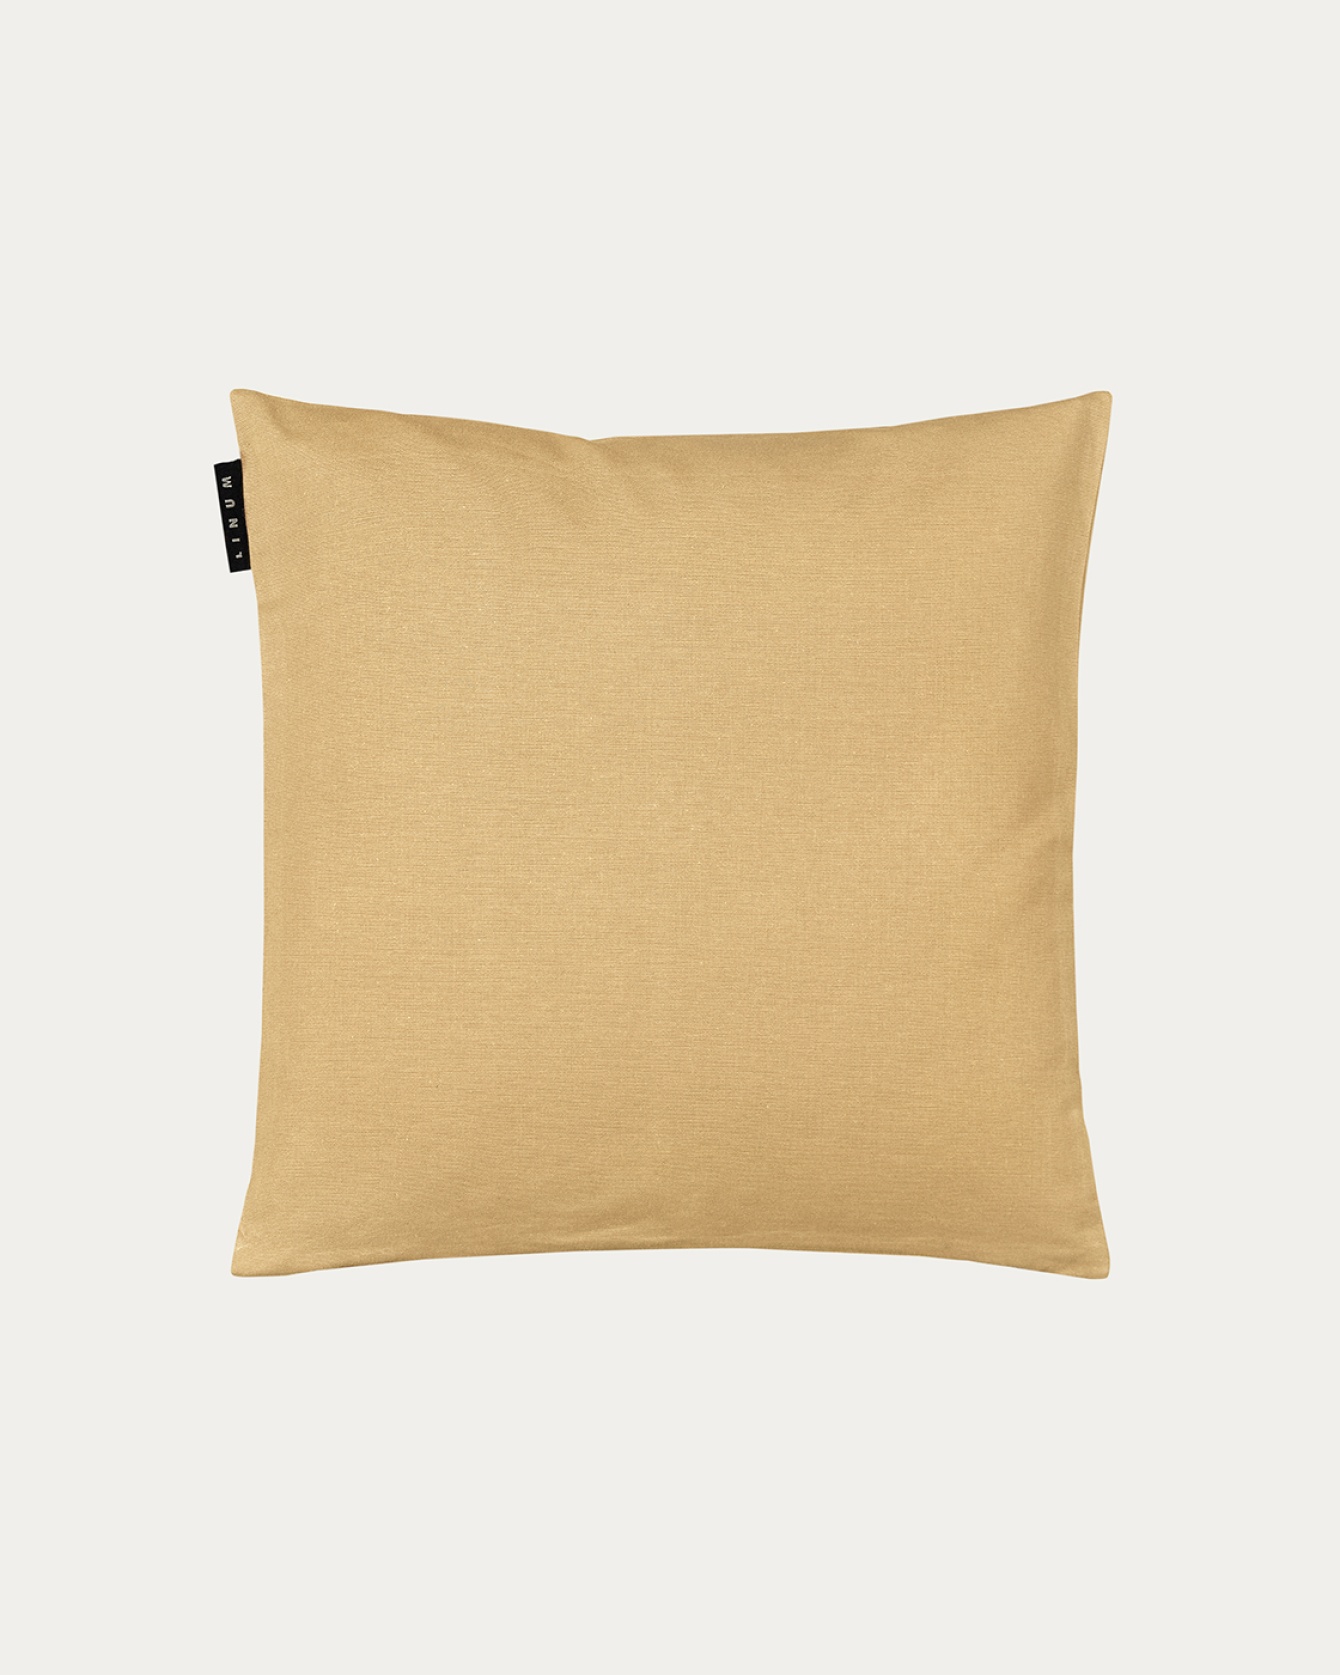 ANNABELL Cushion cover 40x40 cm Straw yellow